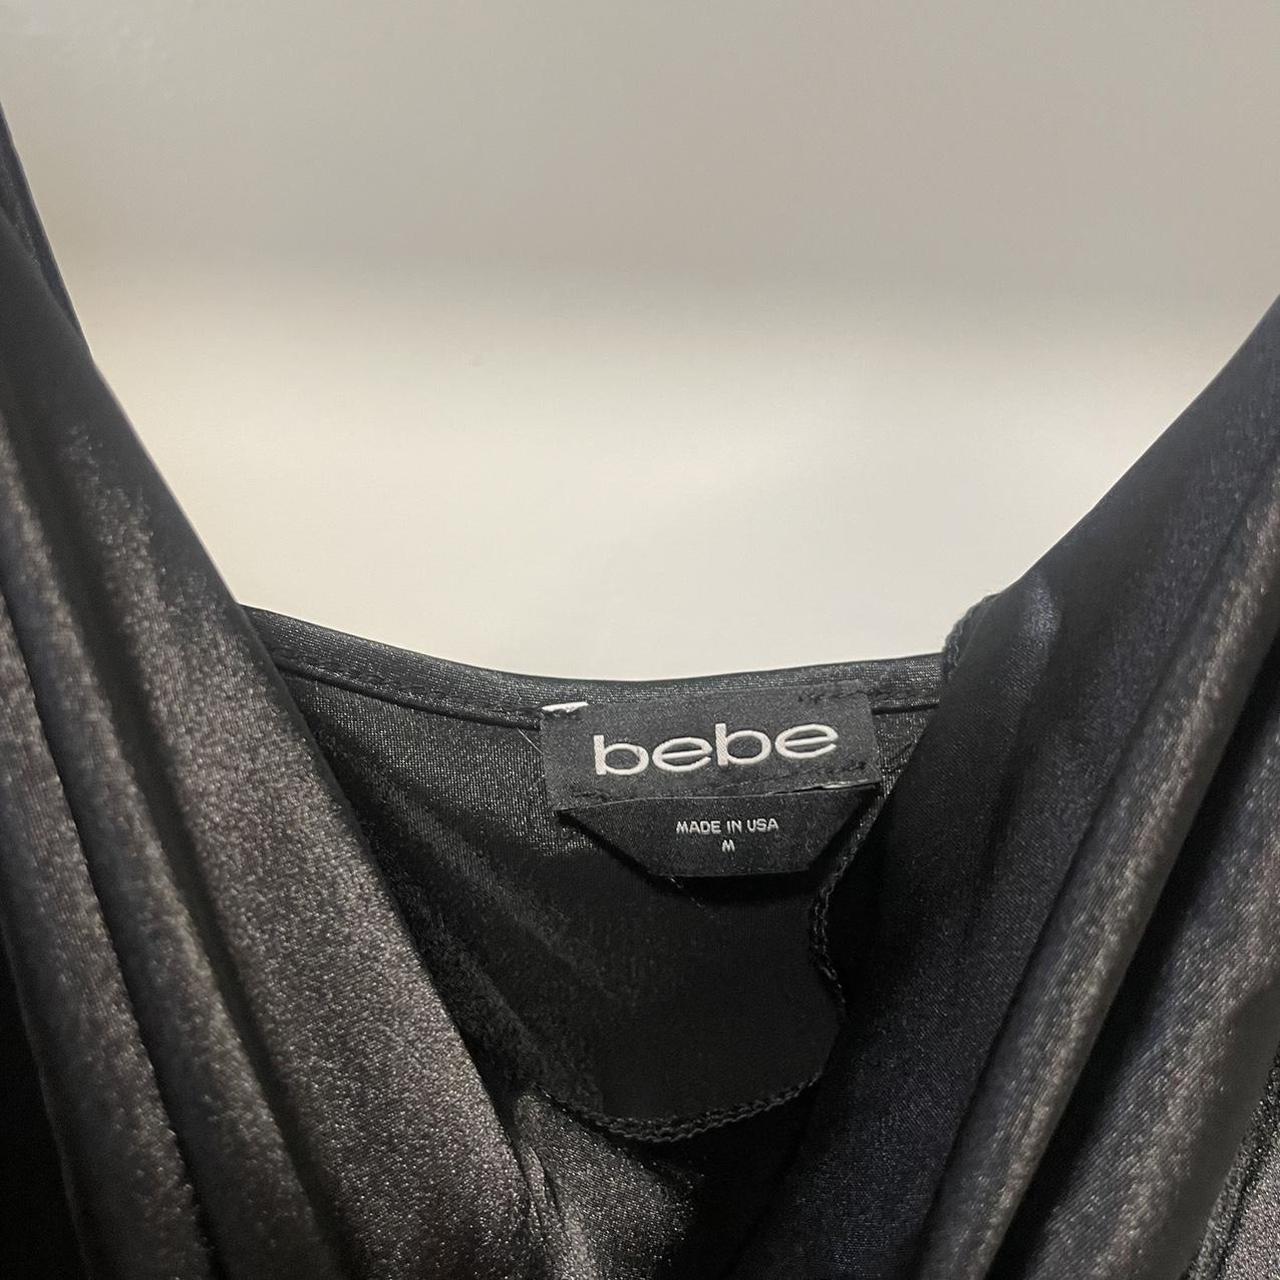 Product Image 3 - Bebe black satin dress. Spaghetti